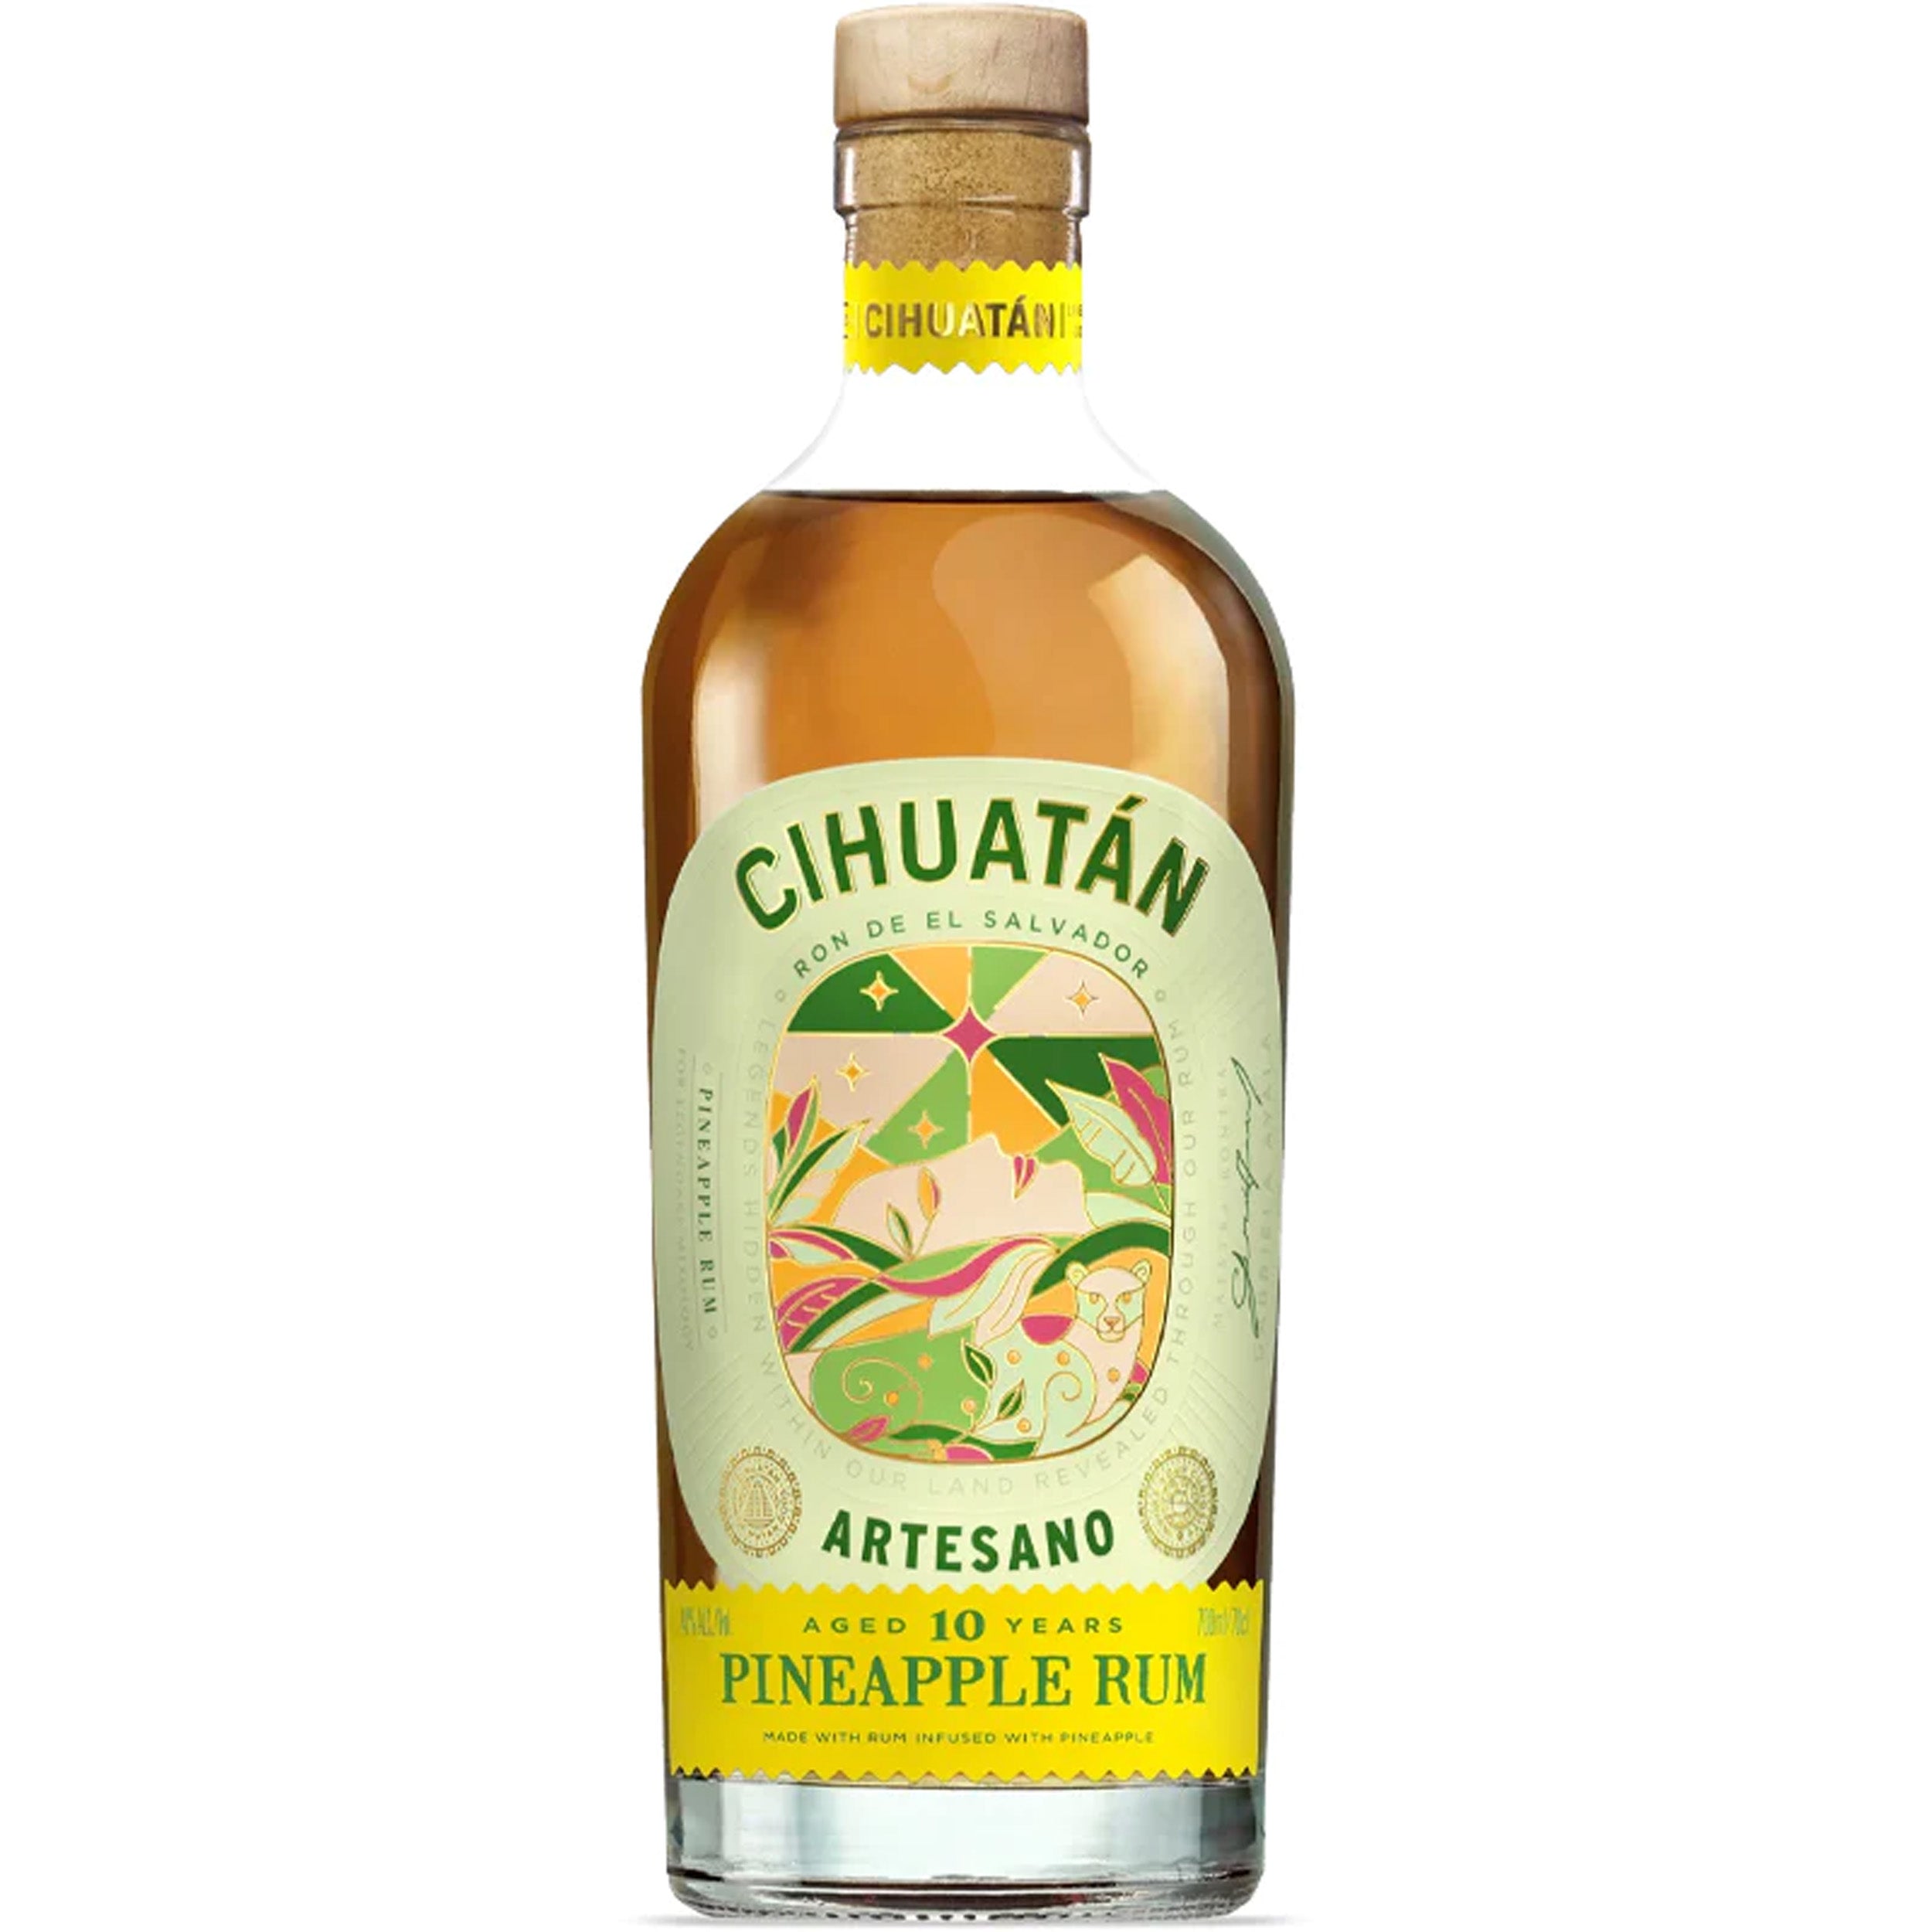 Ron Cihuatan Artesano 10 Year Old Pineapple Rum